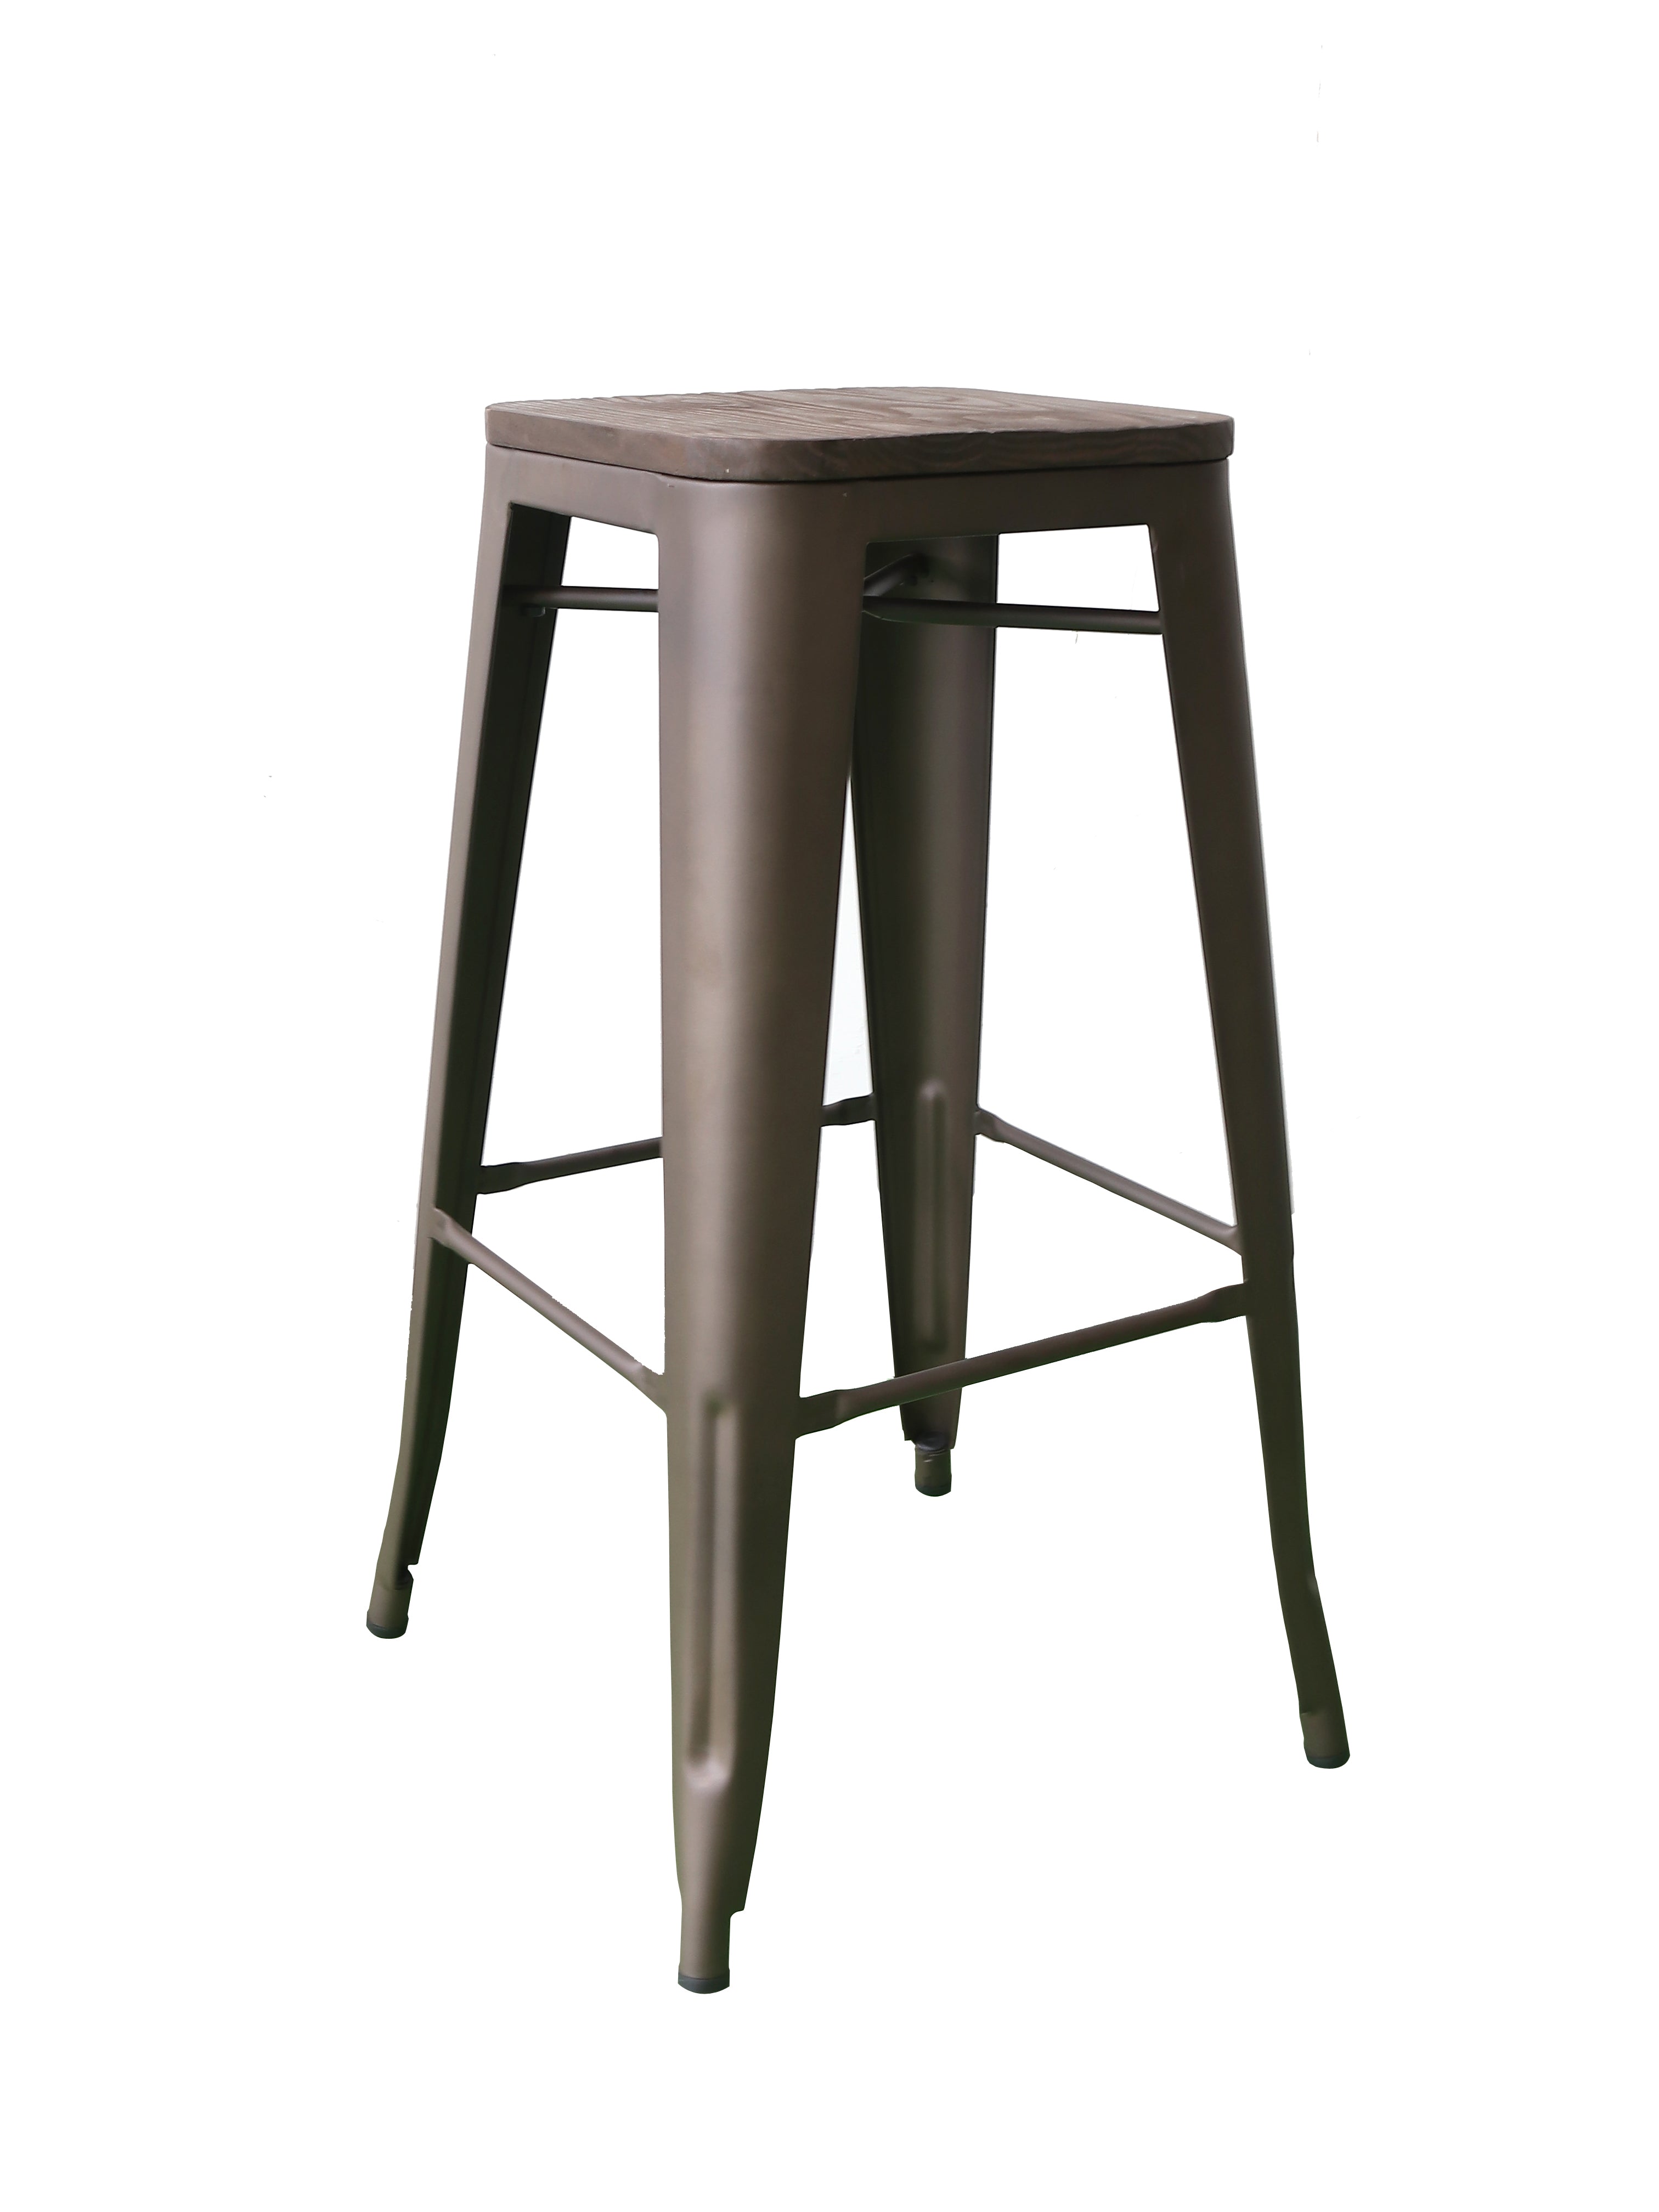 <b>Mountenna Metal Bar Stool with Wooden Seat</b><br>L430 X D430 X H755MM